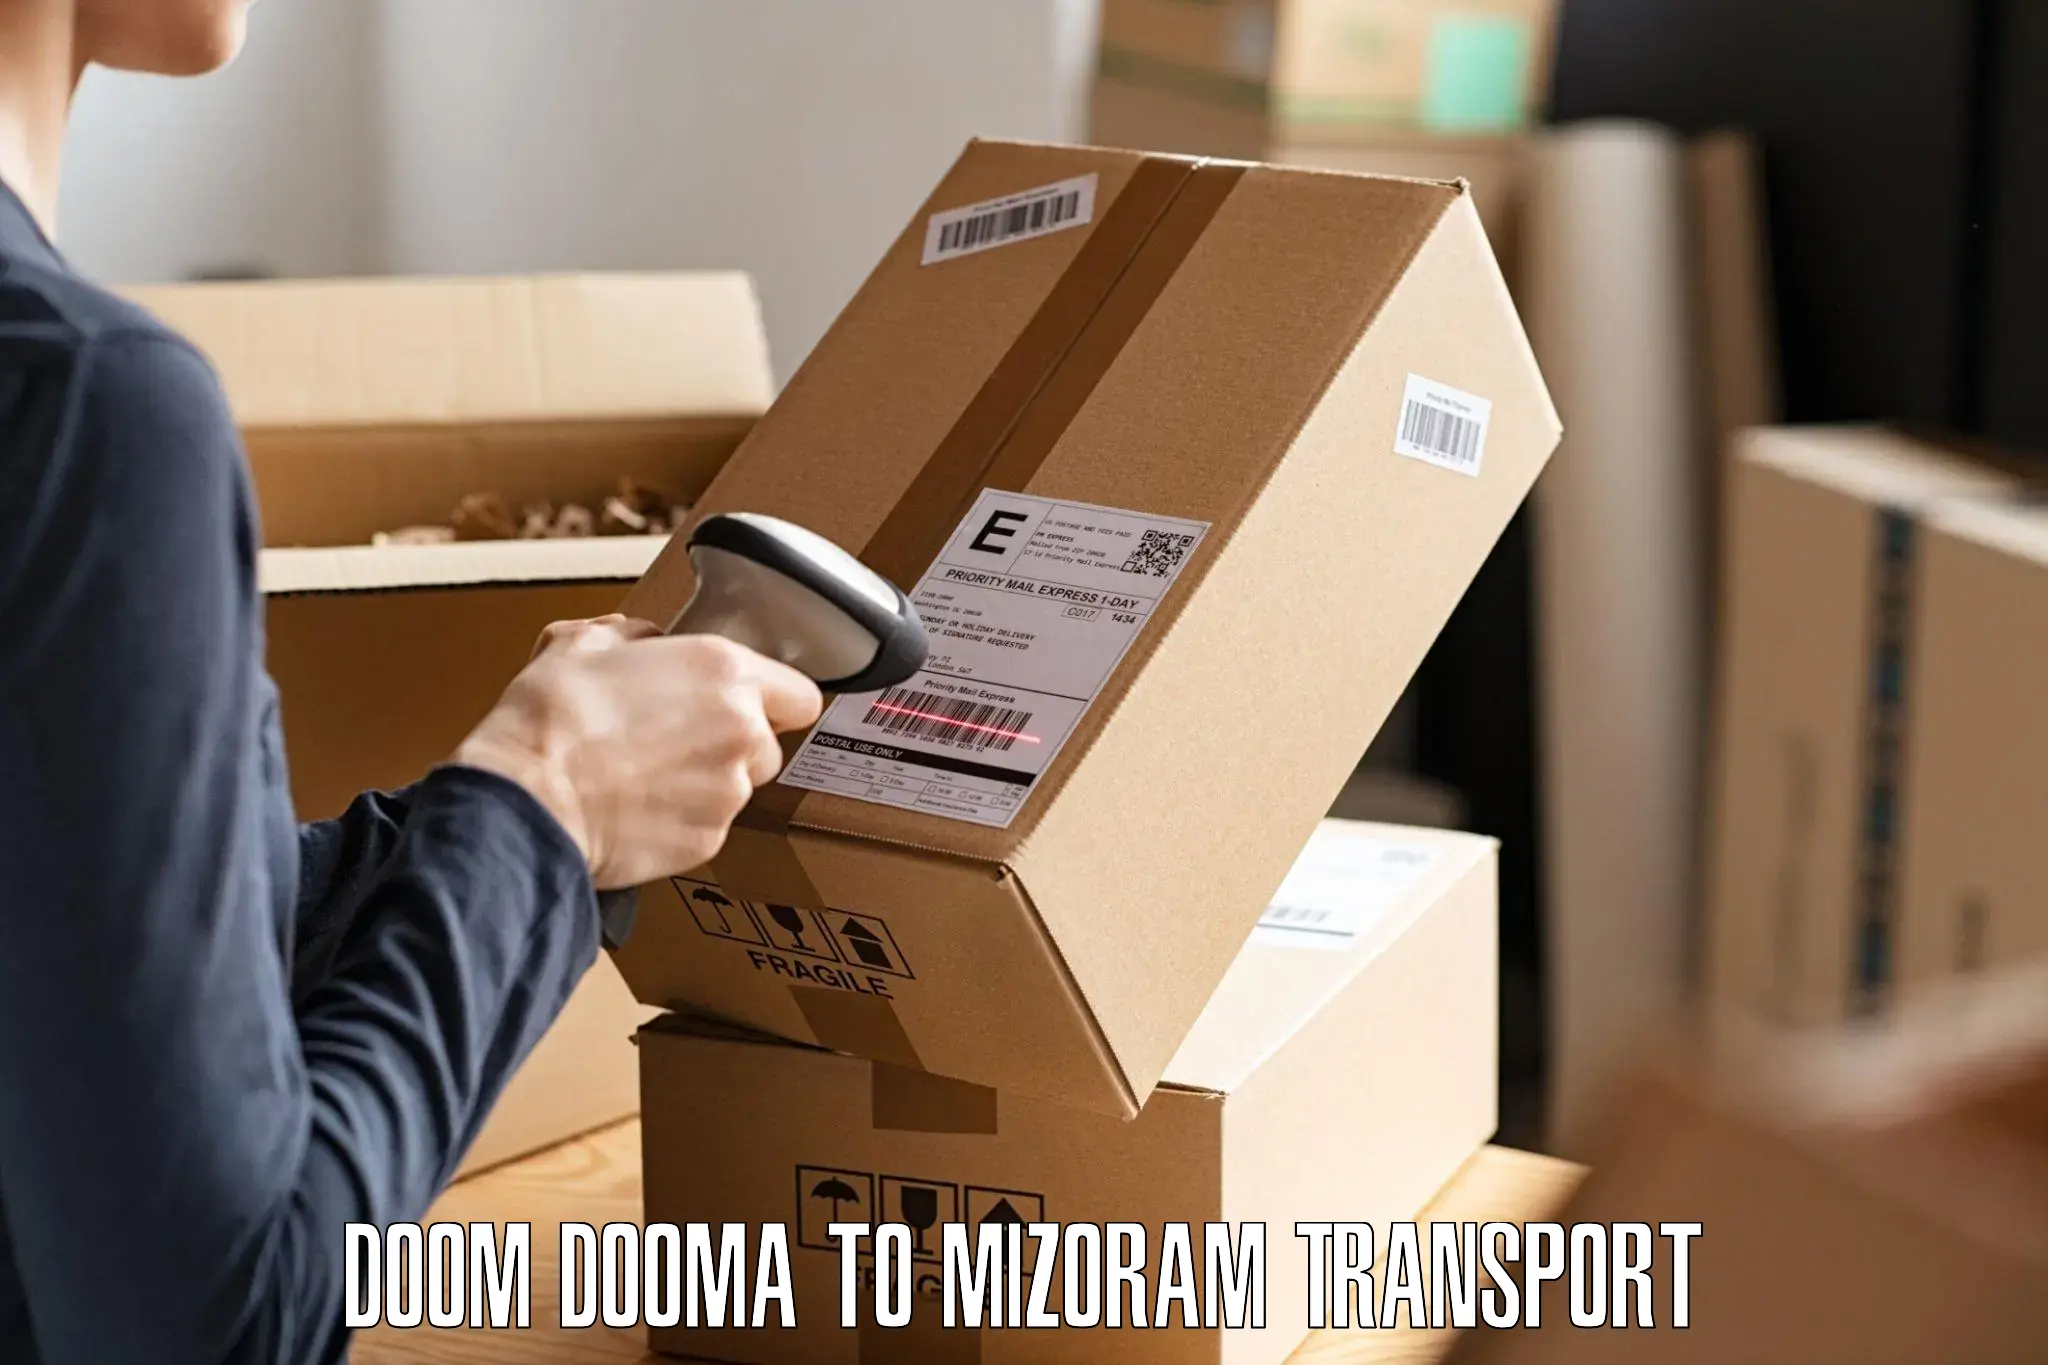 Cargo transport services Doom Dooma to Siaha